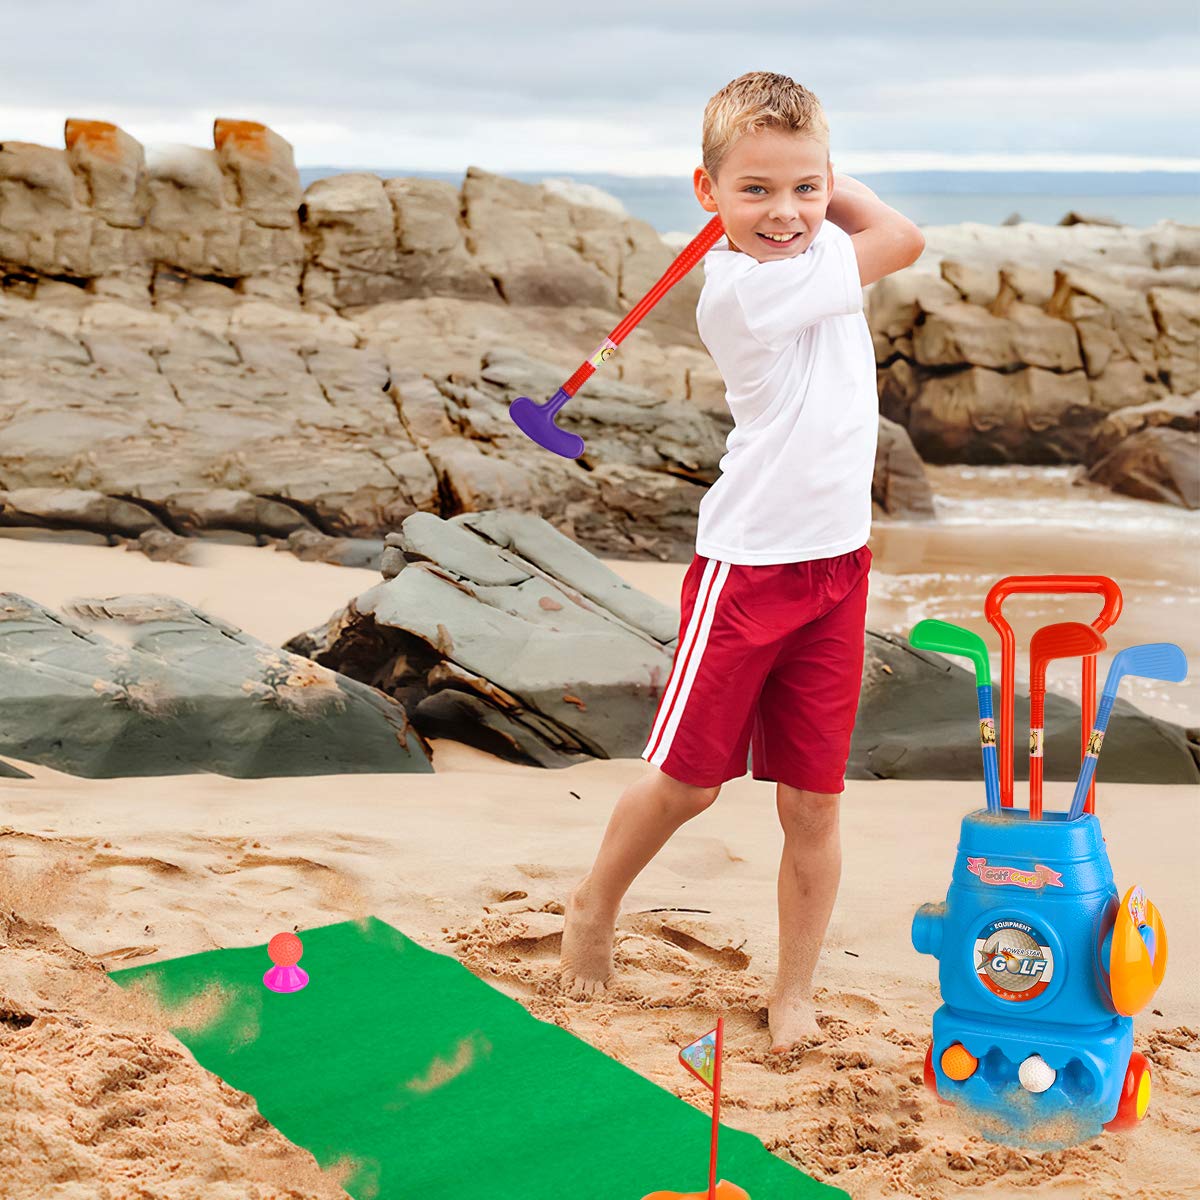 Meland Kids Golf Club Set - Toddler Golf Ball Game Play Set Sports Toys Gift for Boys Girls 3 4 5 6 Year Old